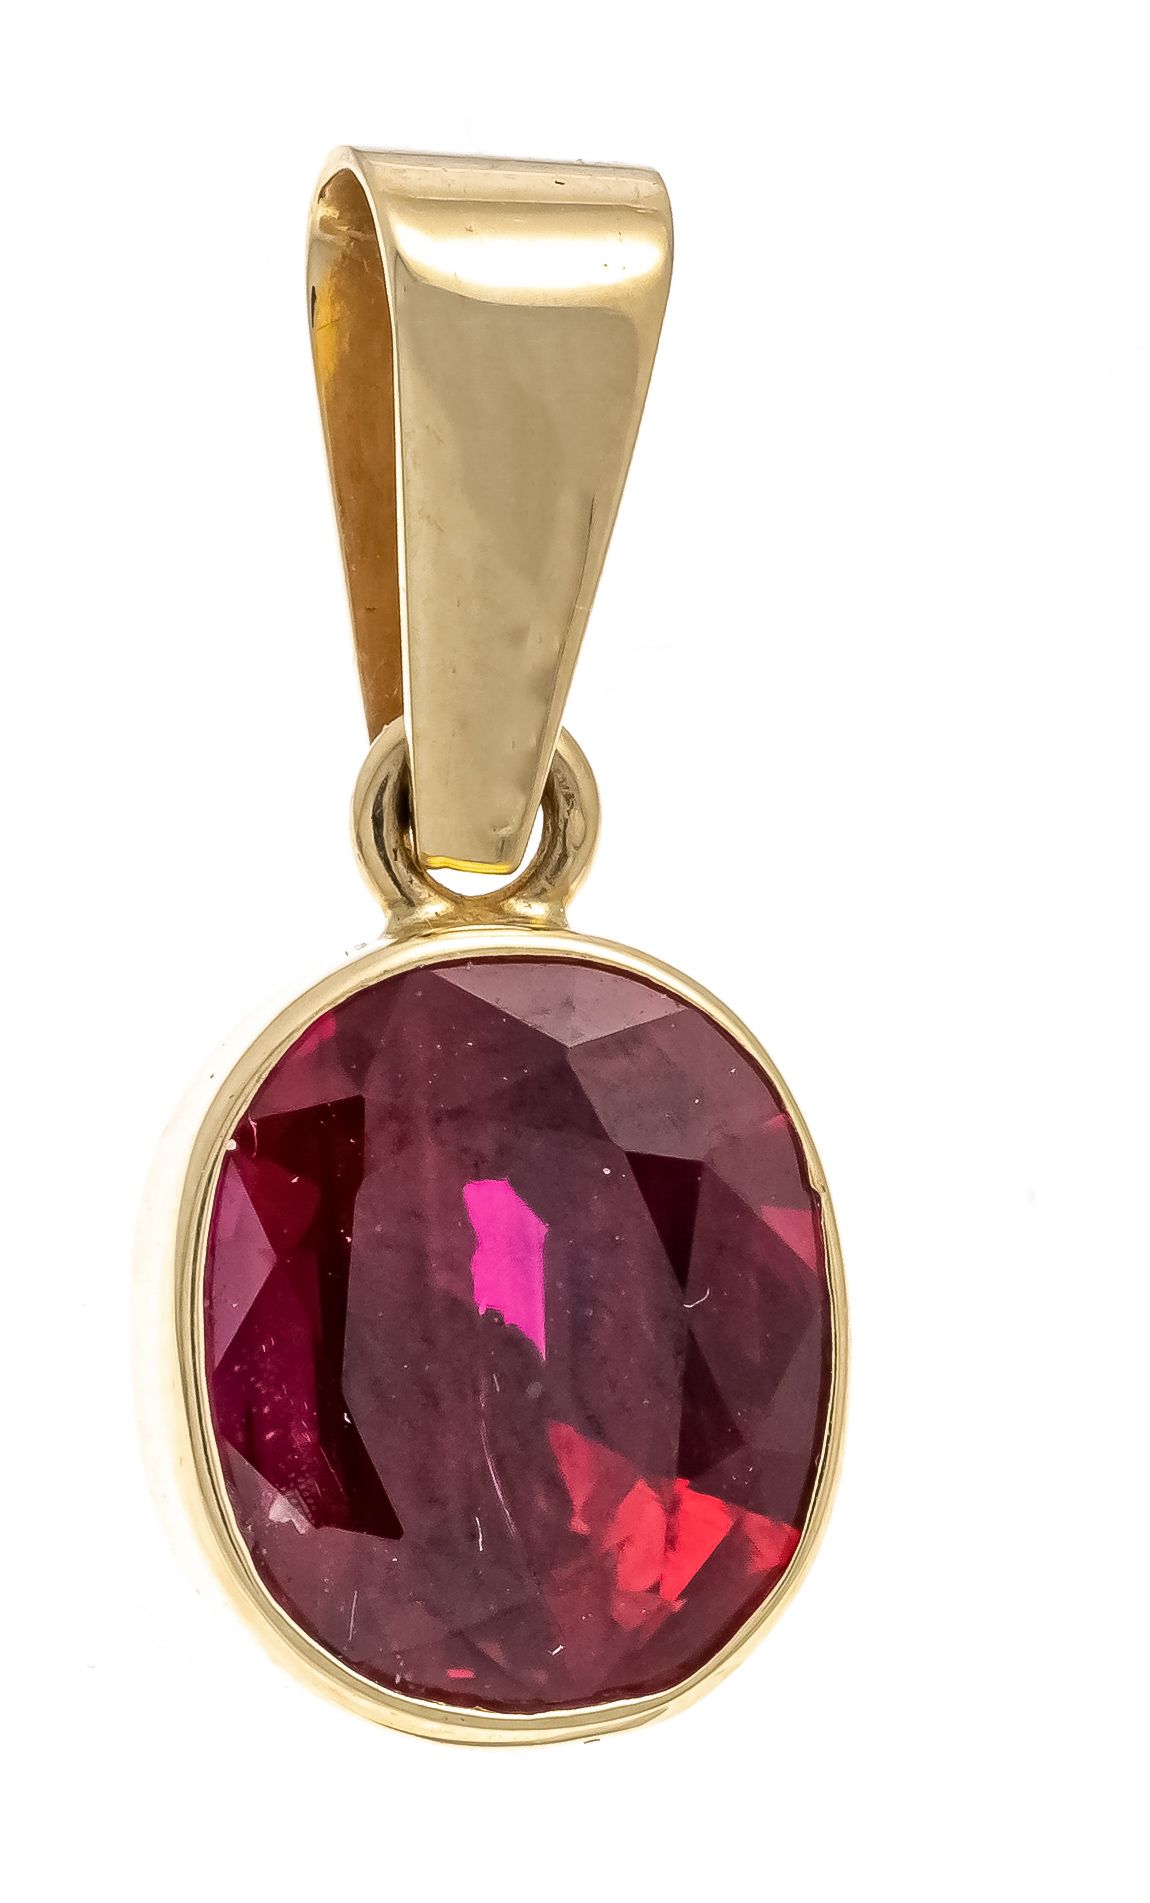 Null 合成红宝石吊坠GG 750/000，含一颗10.2 x 8.6毫米的椭圆形刻面合成红宝石，深红色，透明，长23毫米，重2.8克。